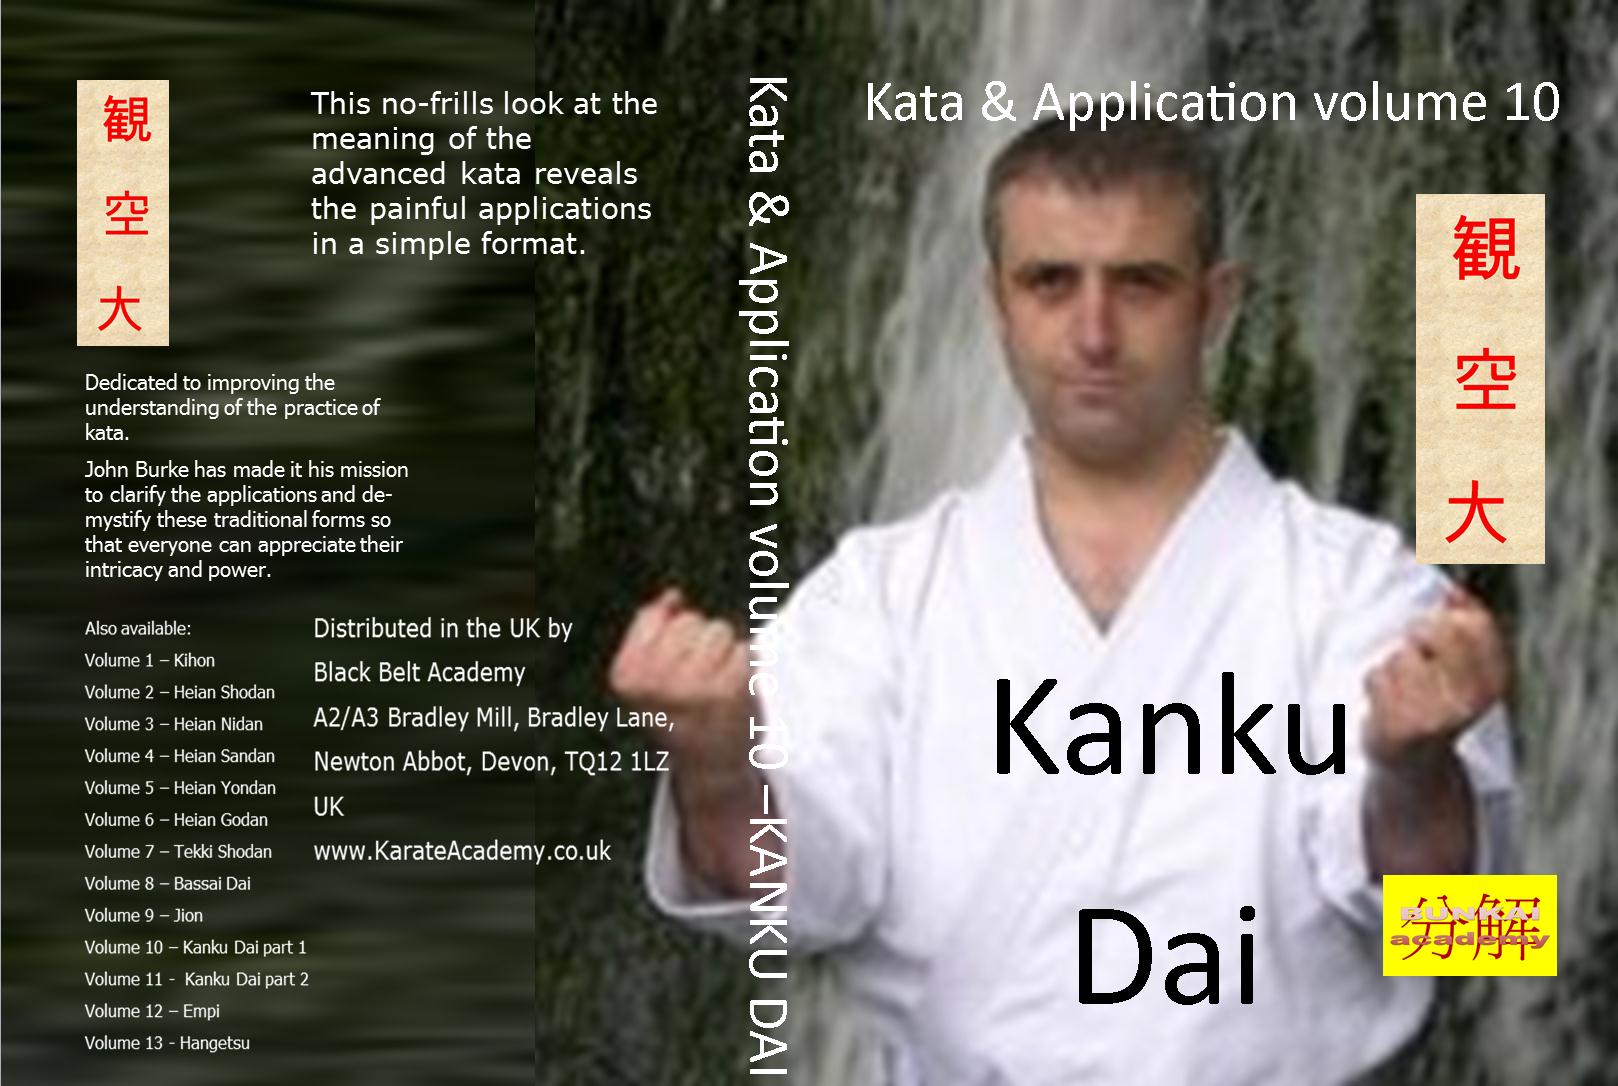 Kanku dai bunkai applications